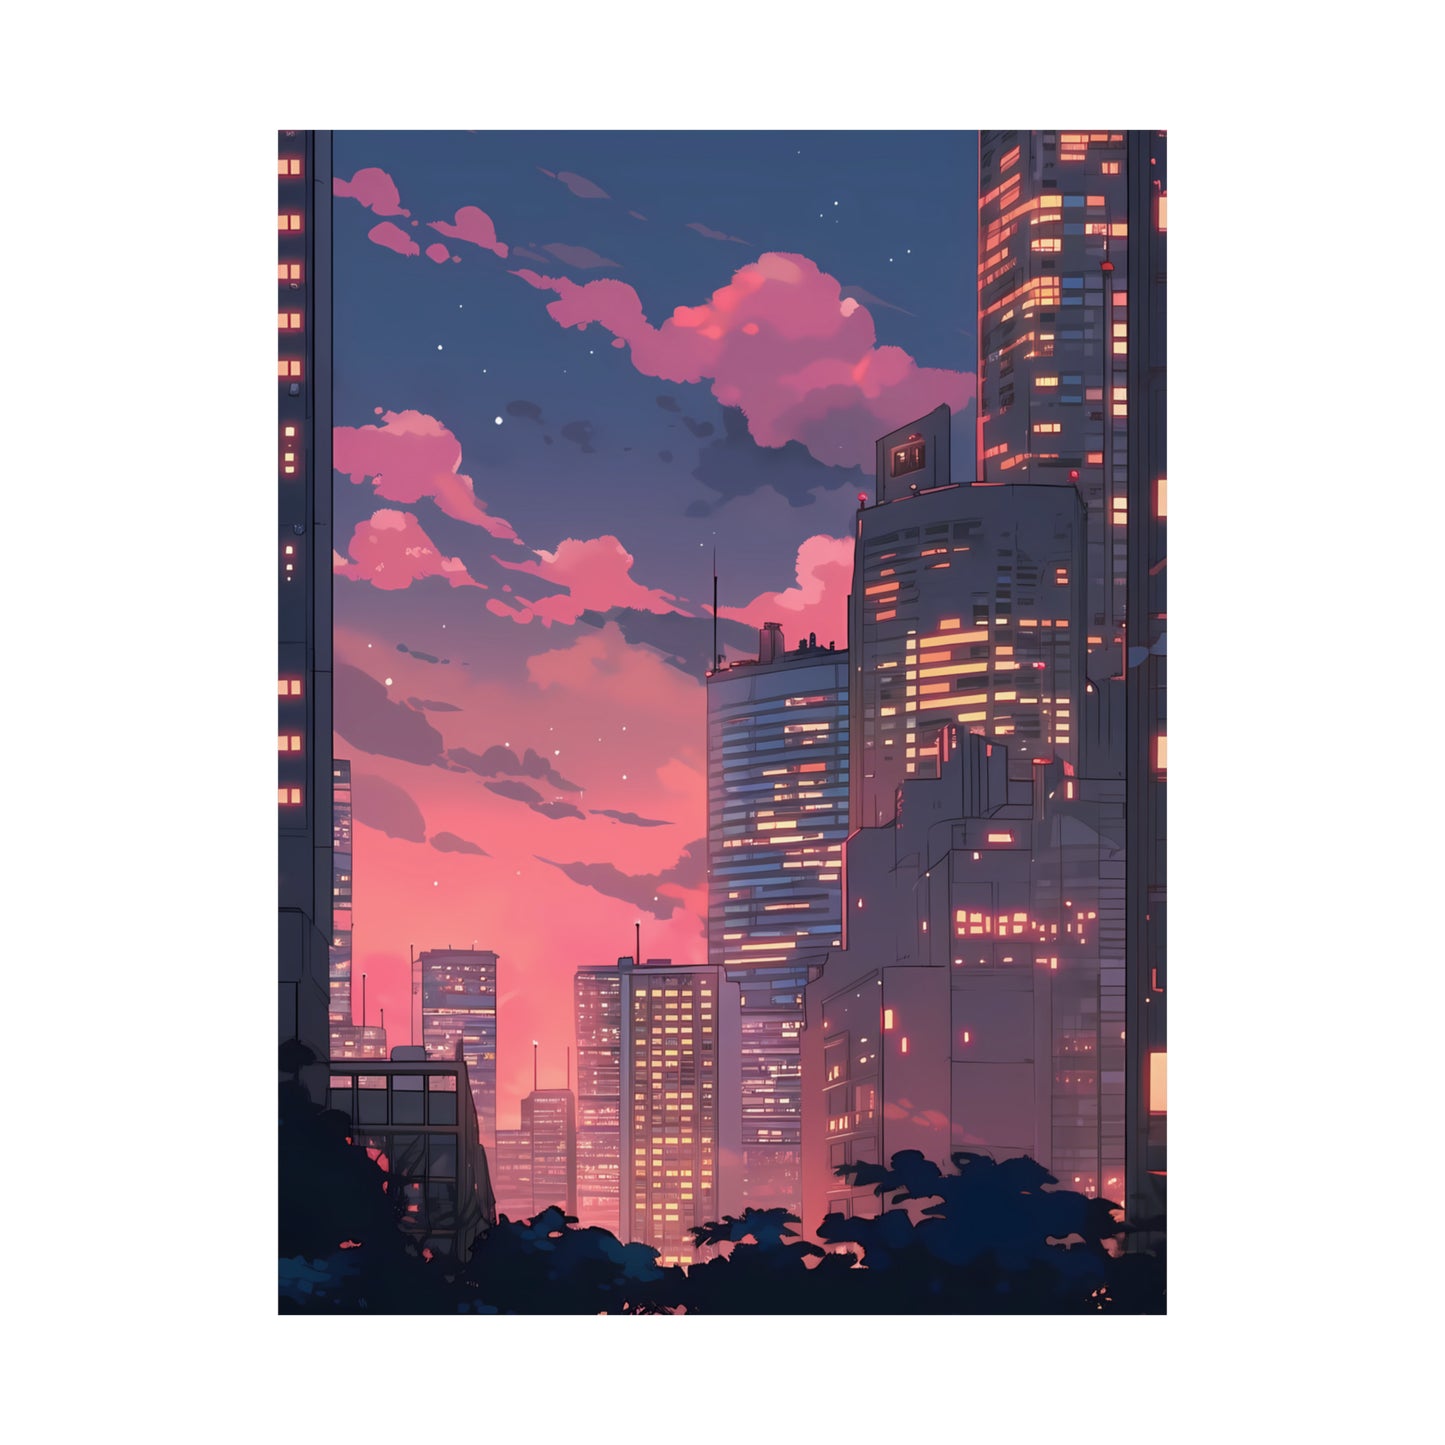 Aesthetic City Vibes - Retro Anime Poster